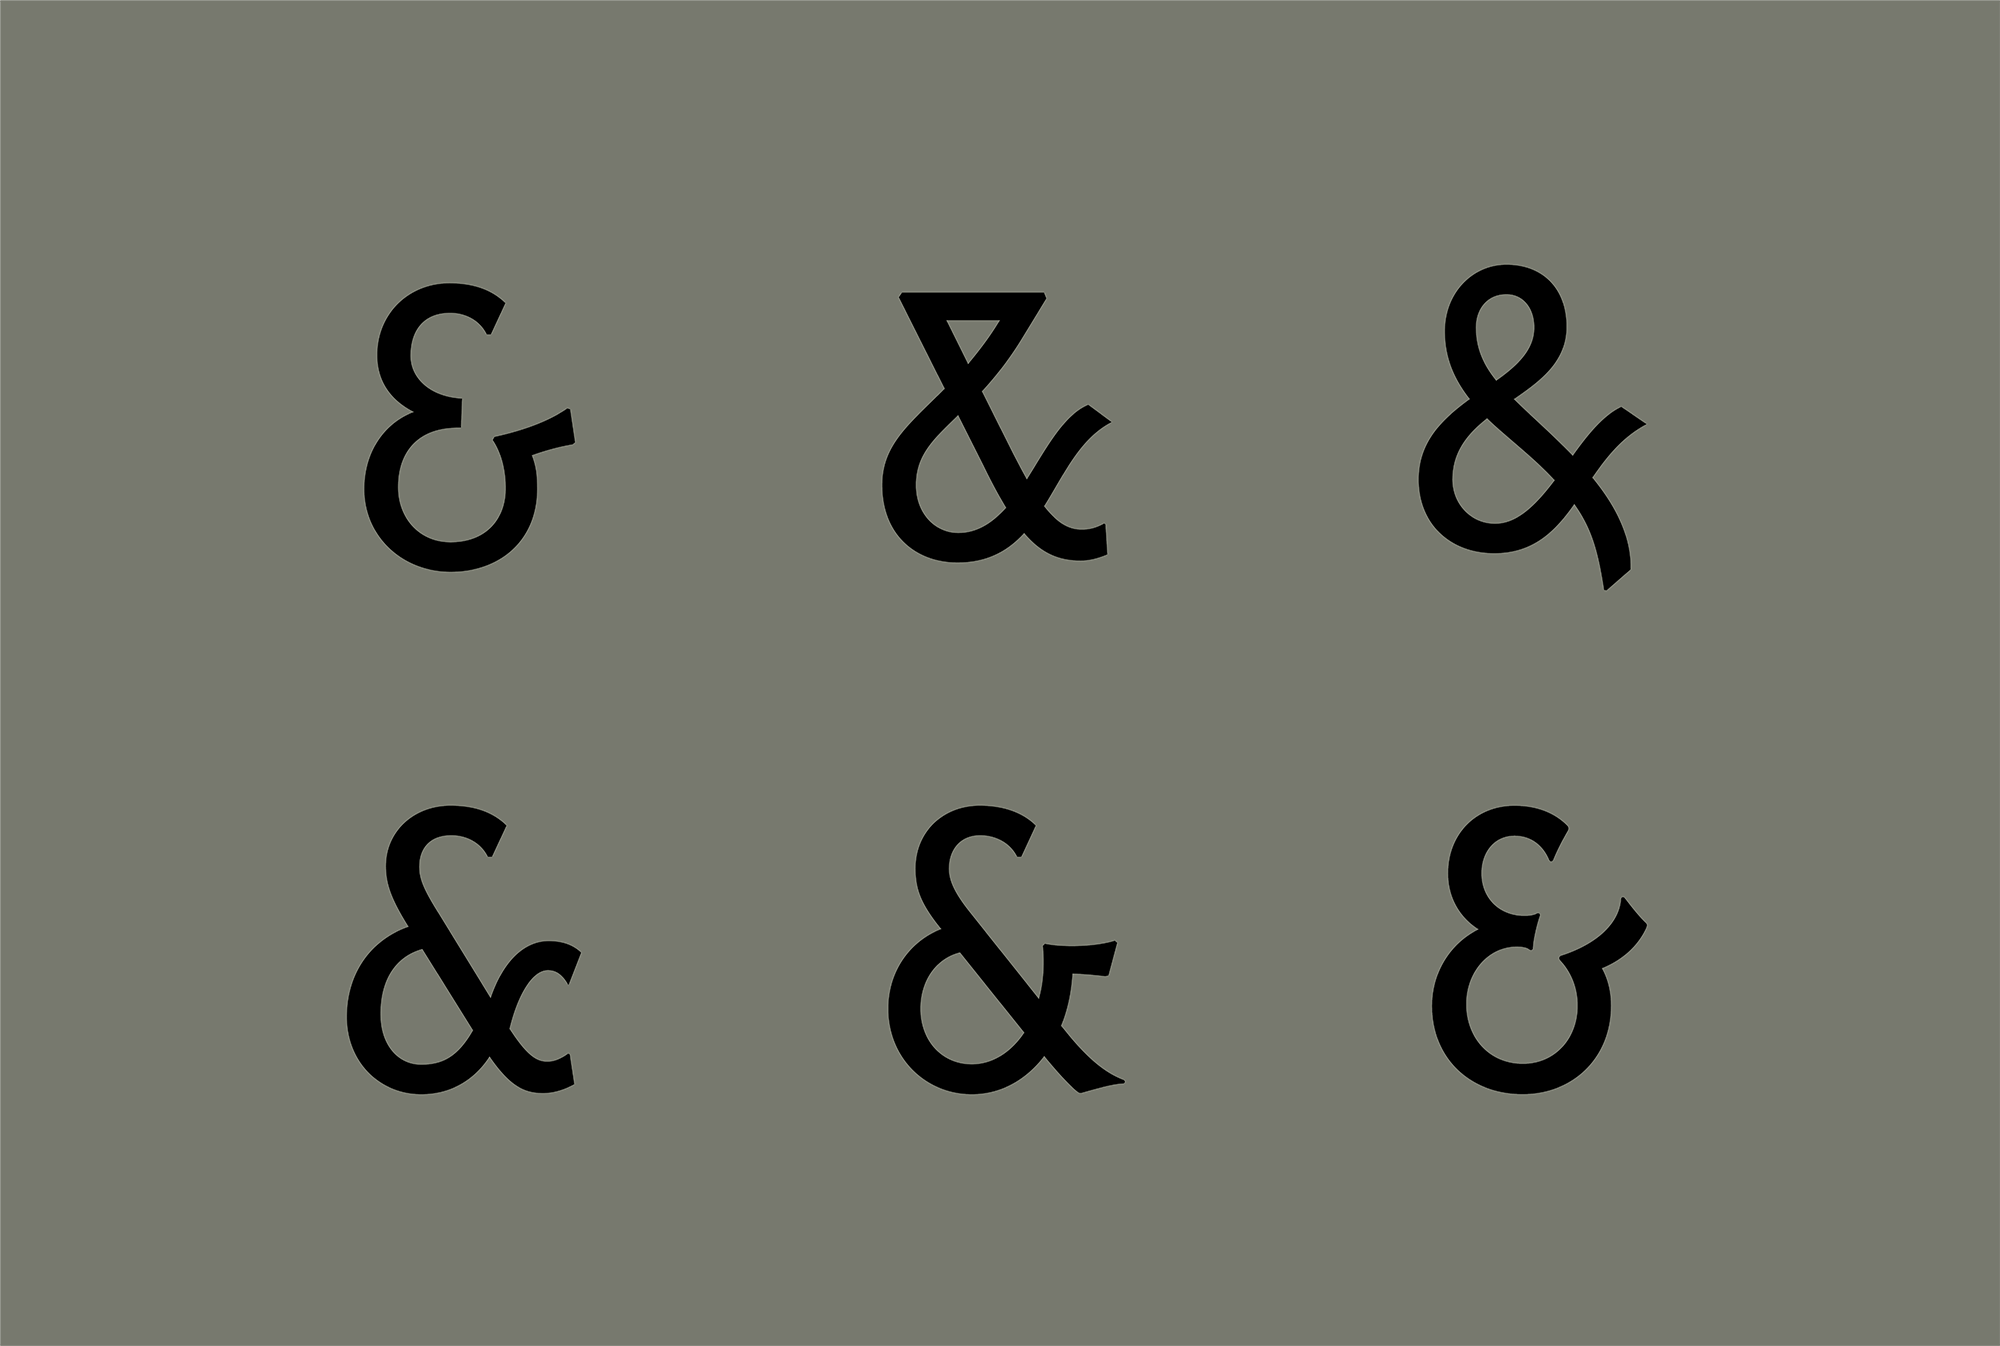 Alternate ampersand designs for the Gage & Tollner restaurant identity